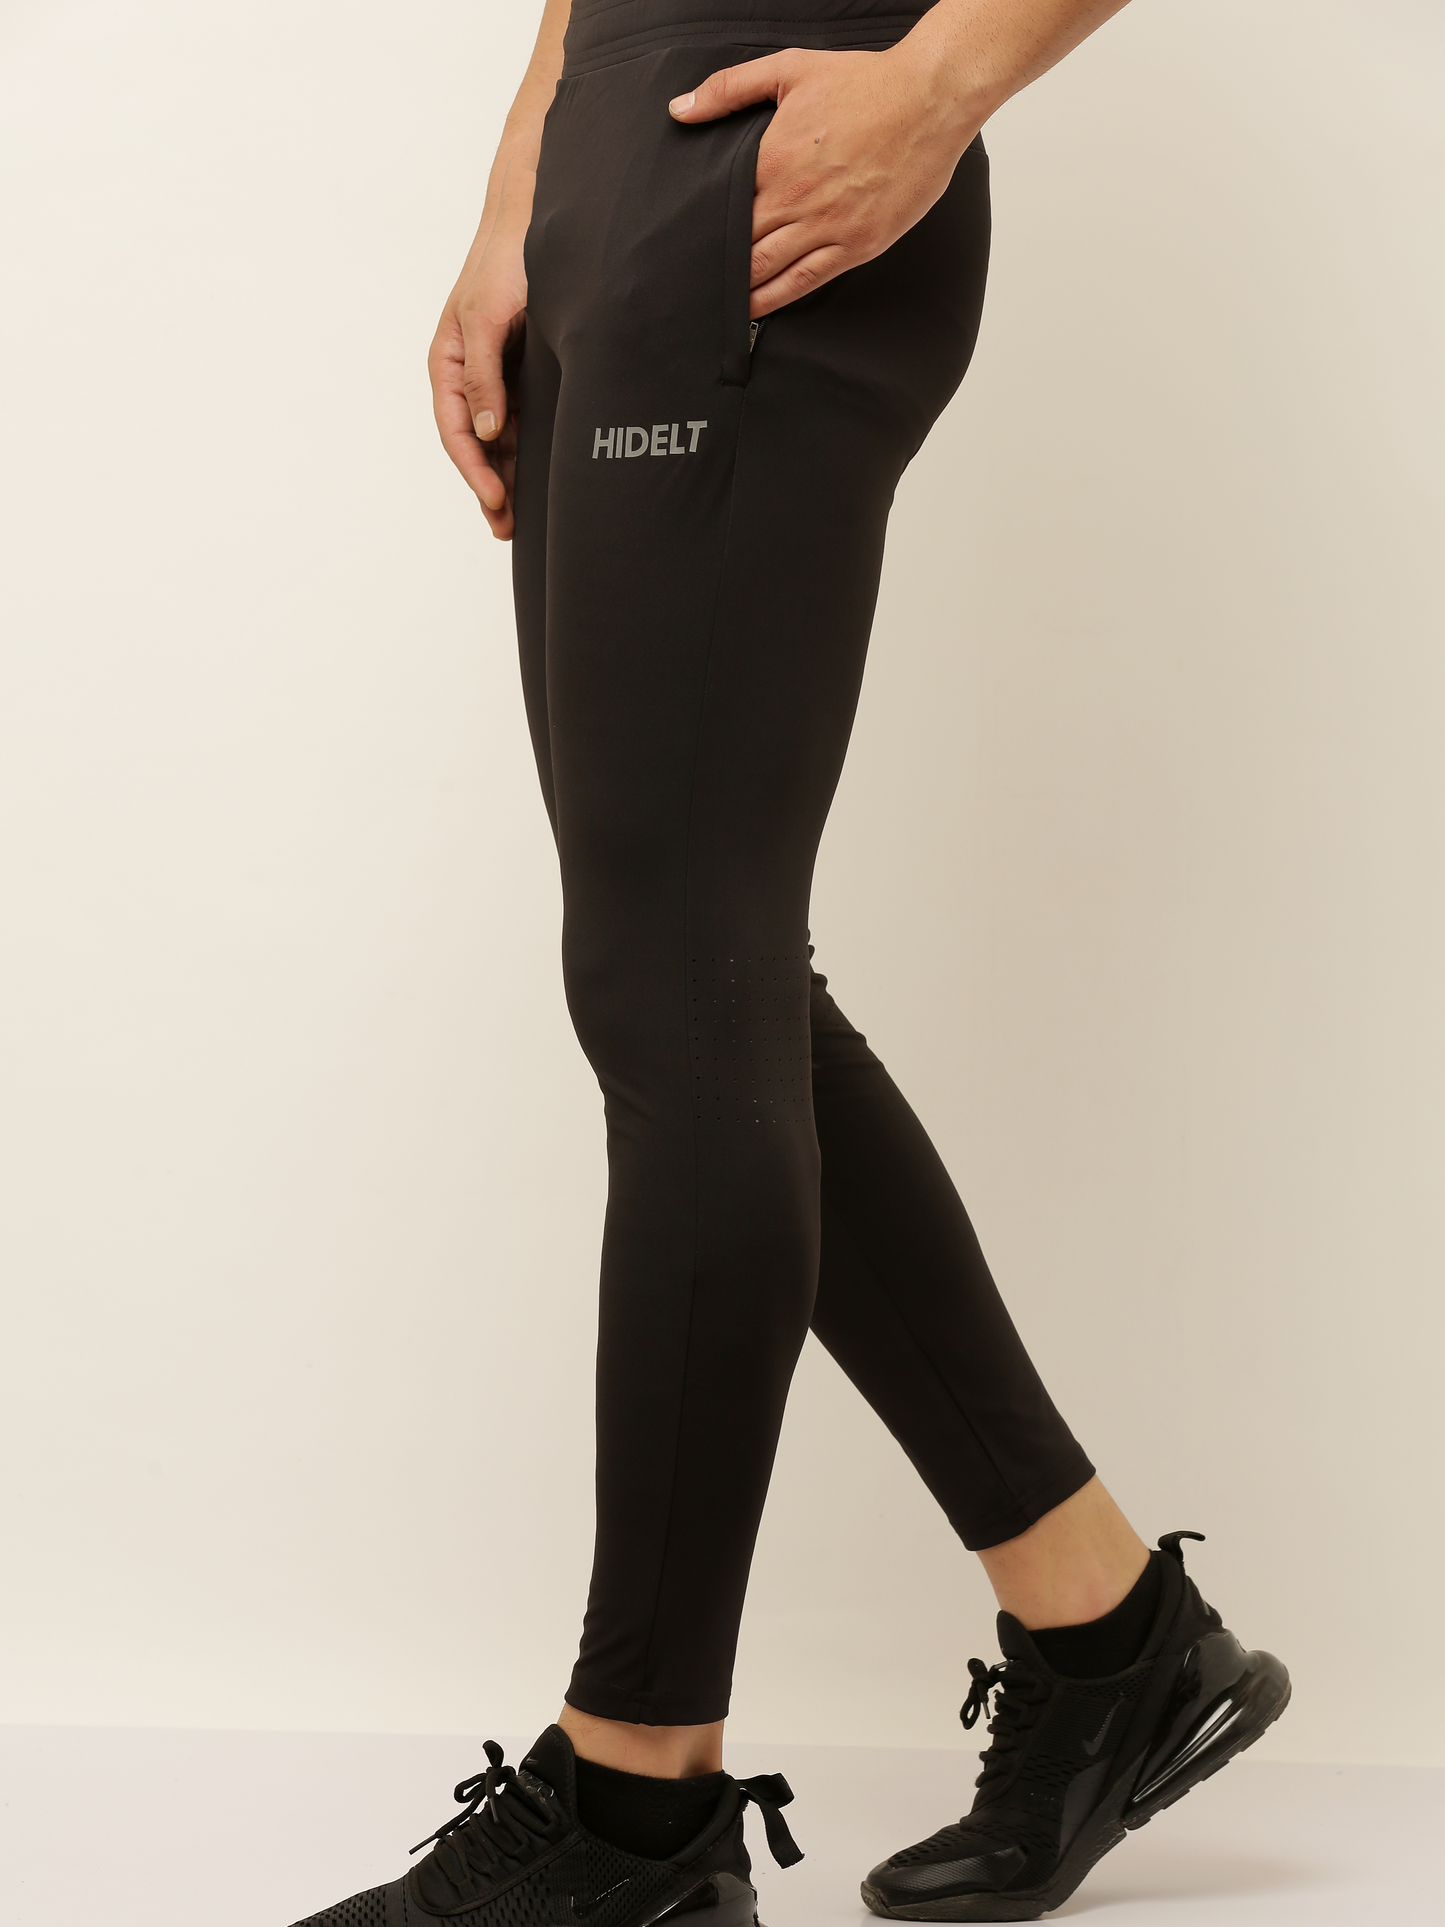 Black Slim Fit Track Pant Red Stripe Trouser Stretch Ankle Zipper Jogger  Pants | eBay